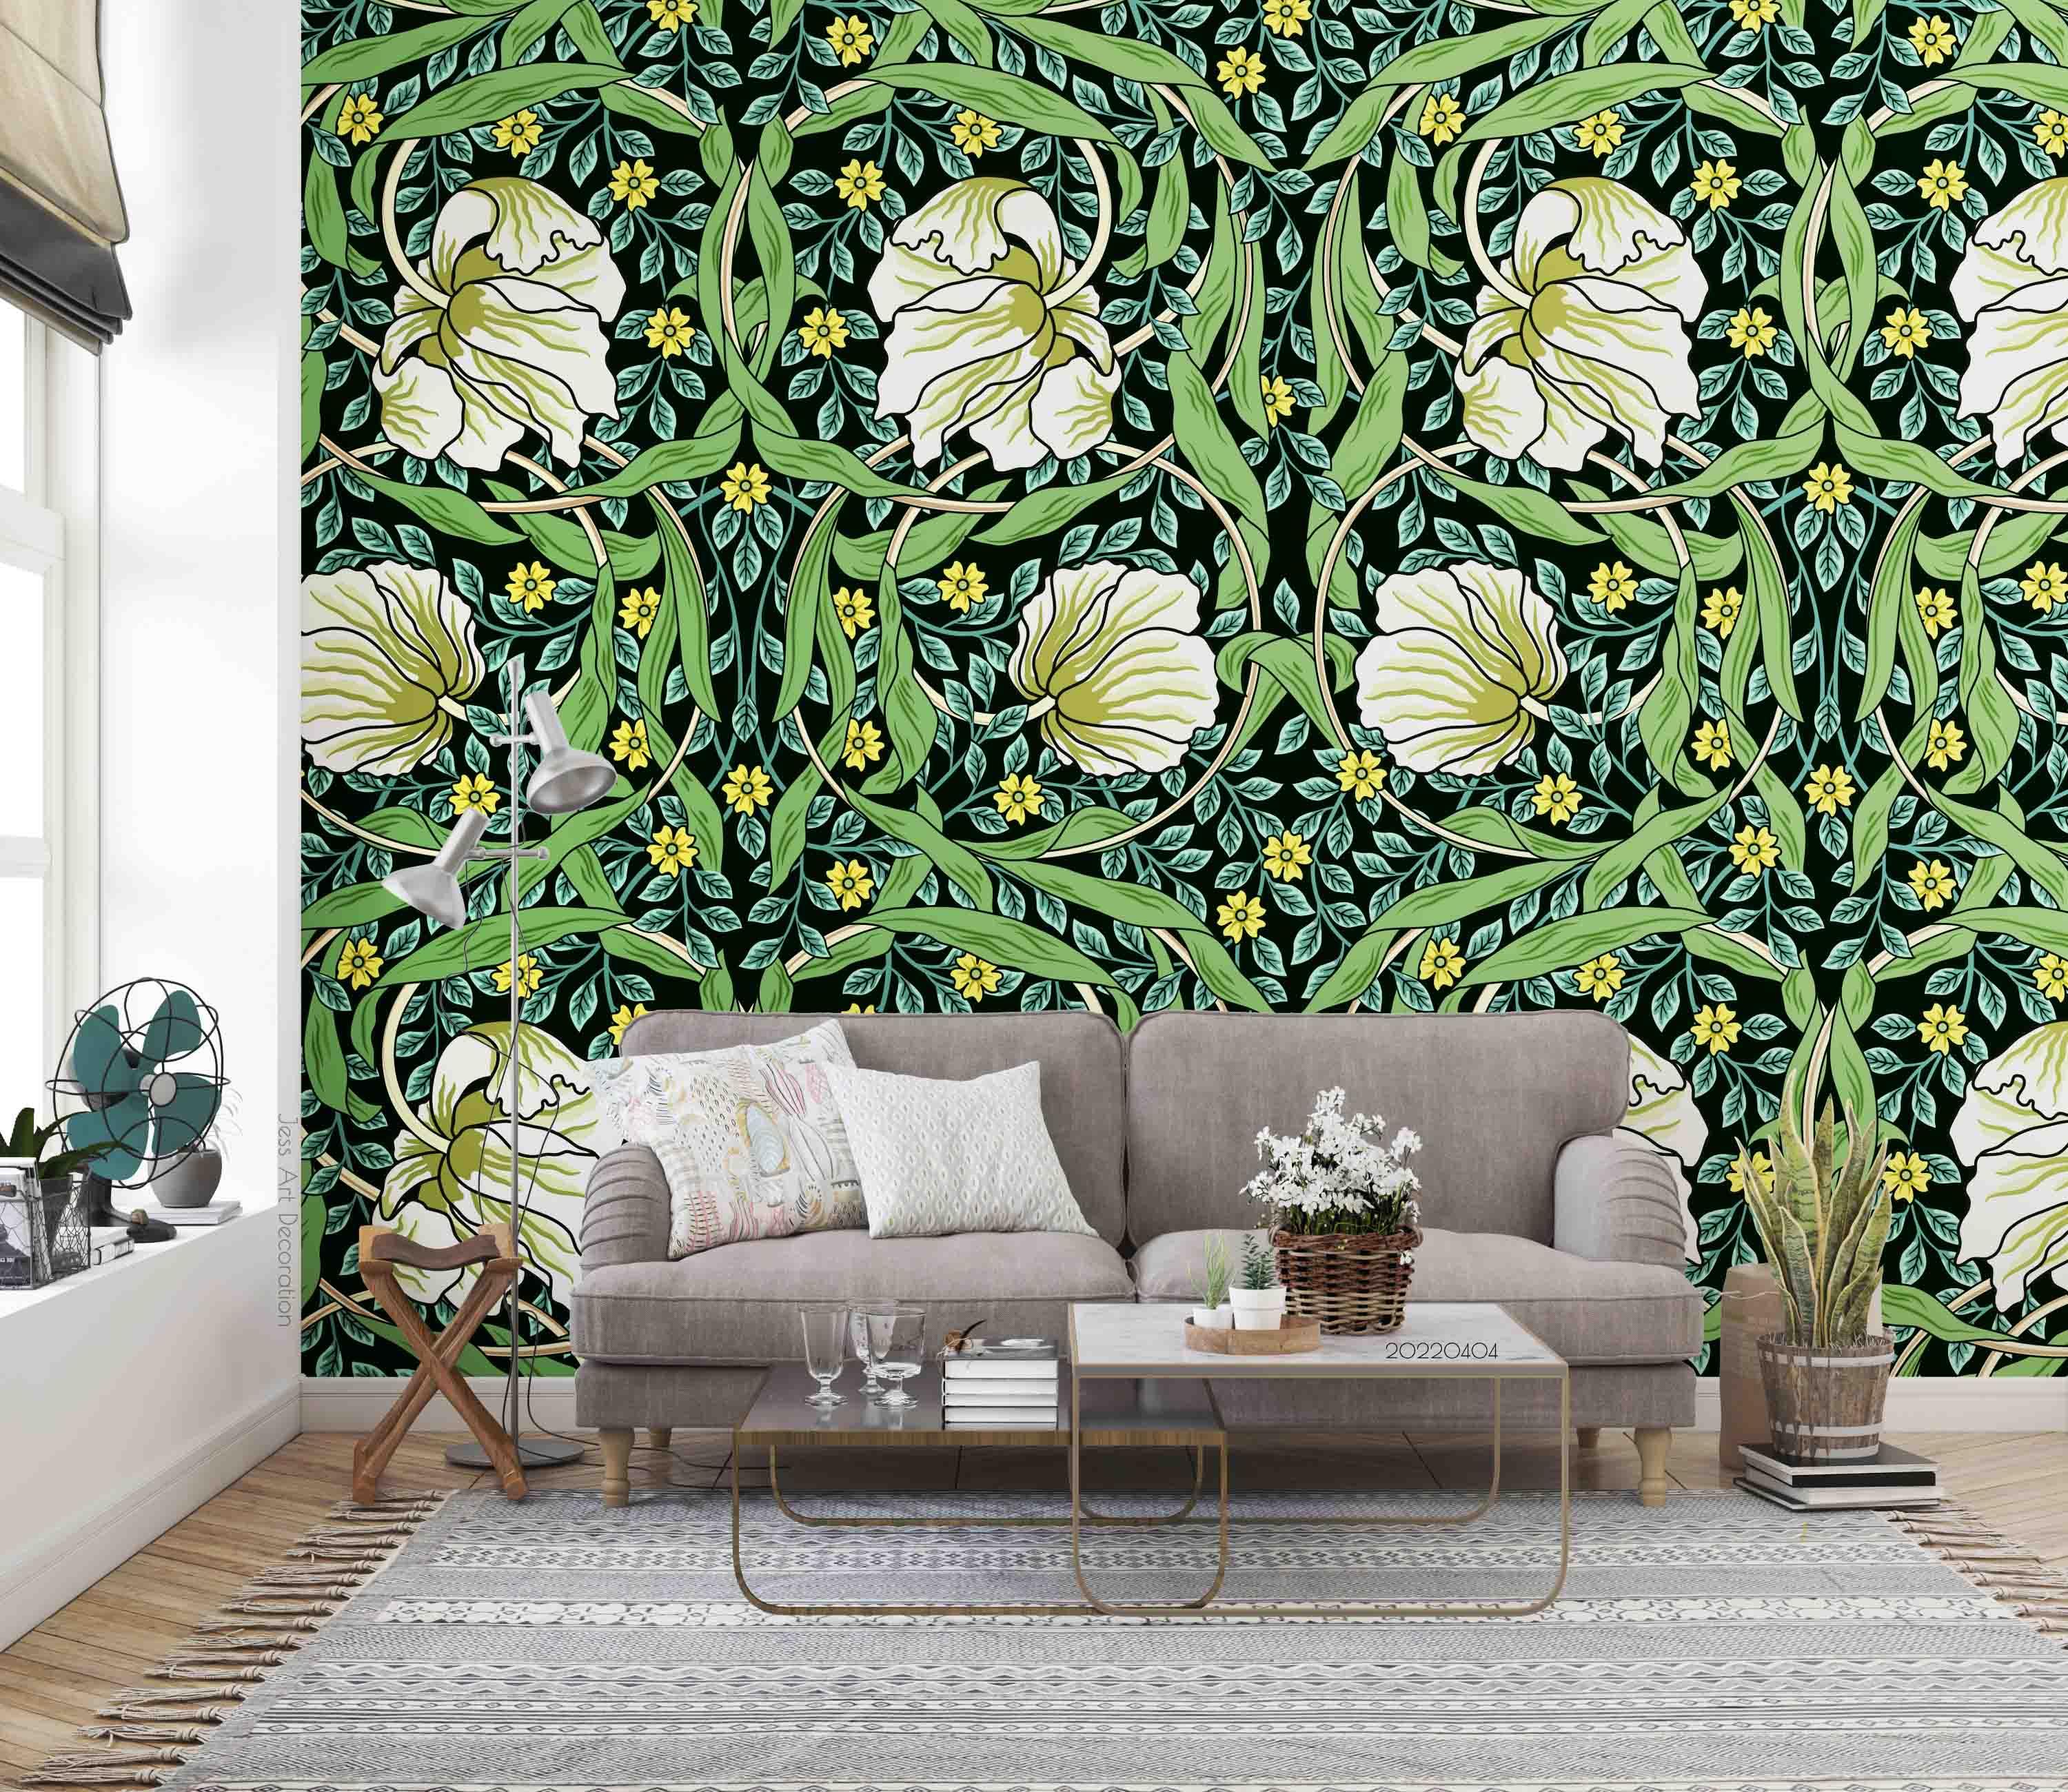 3D Vintage Plant Green Leaf Floral Wall Mural Wallpaper GD 3987- Jess Art Decoration